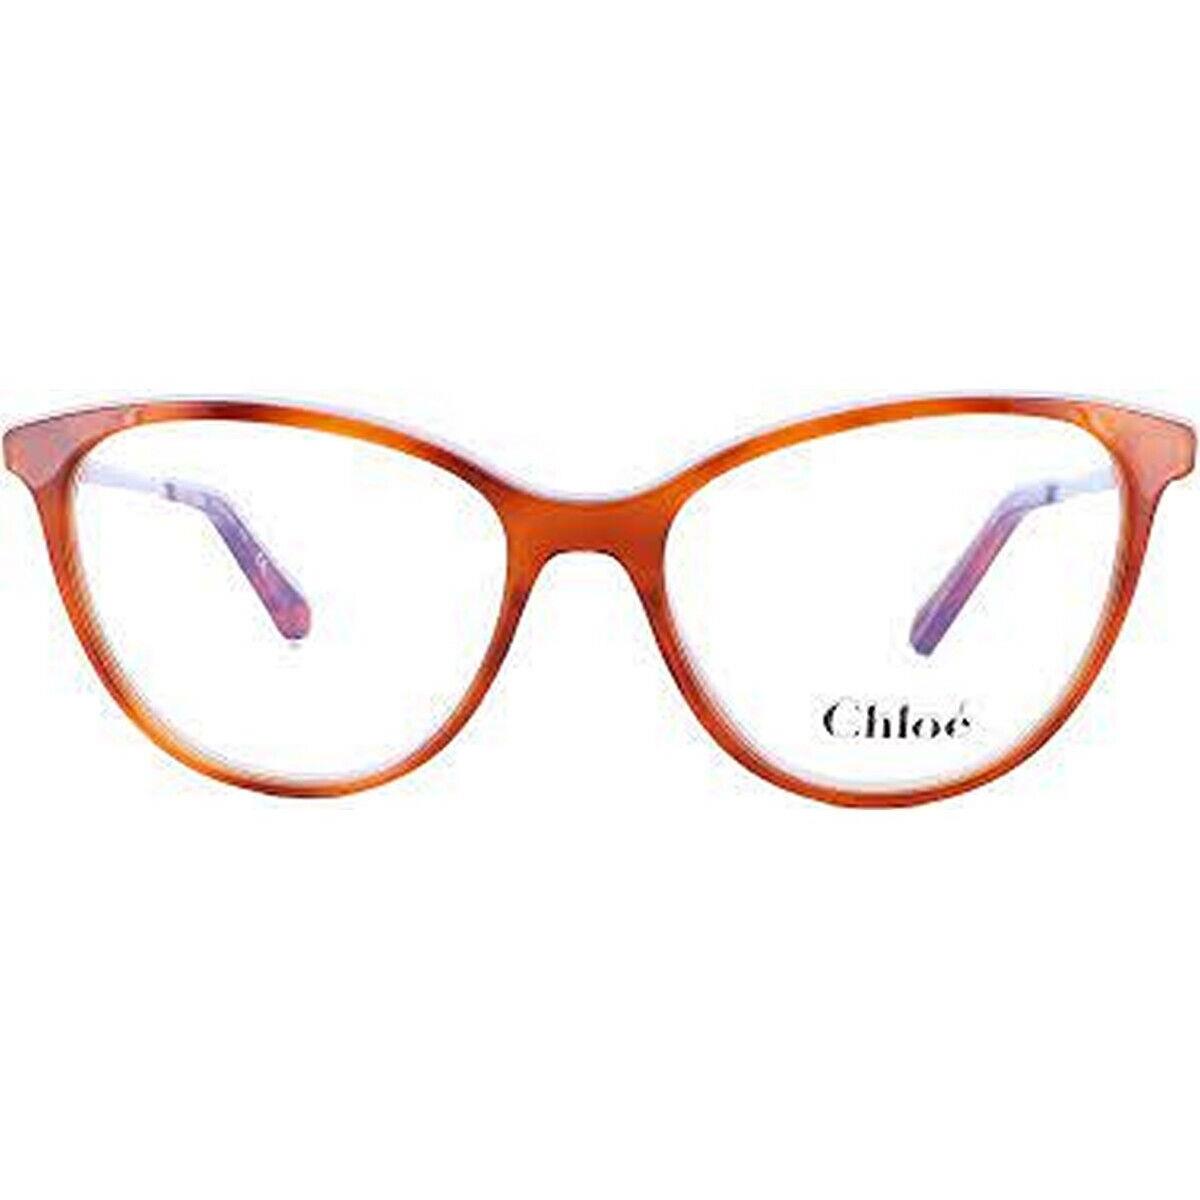 Chloe Women Eyeglasses Size 53mm-140mm-16mm